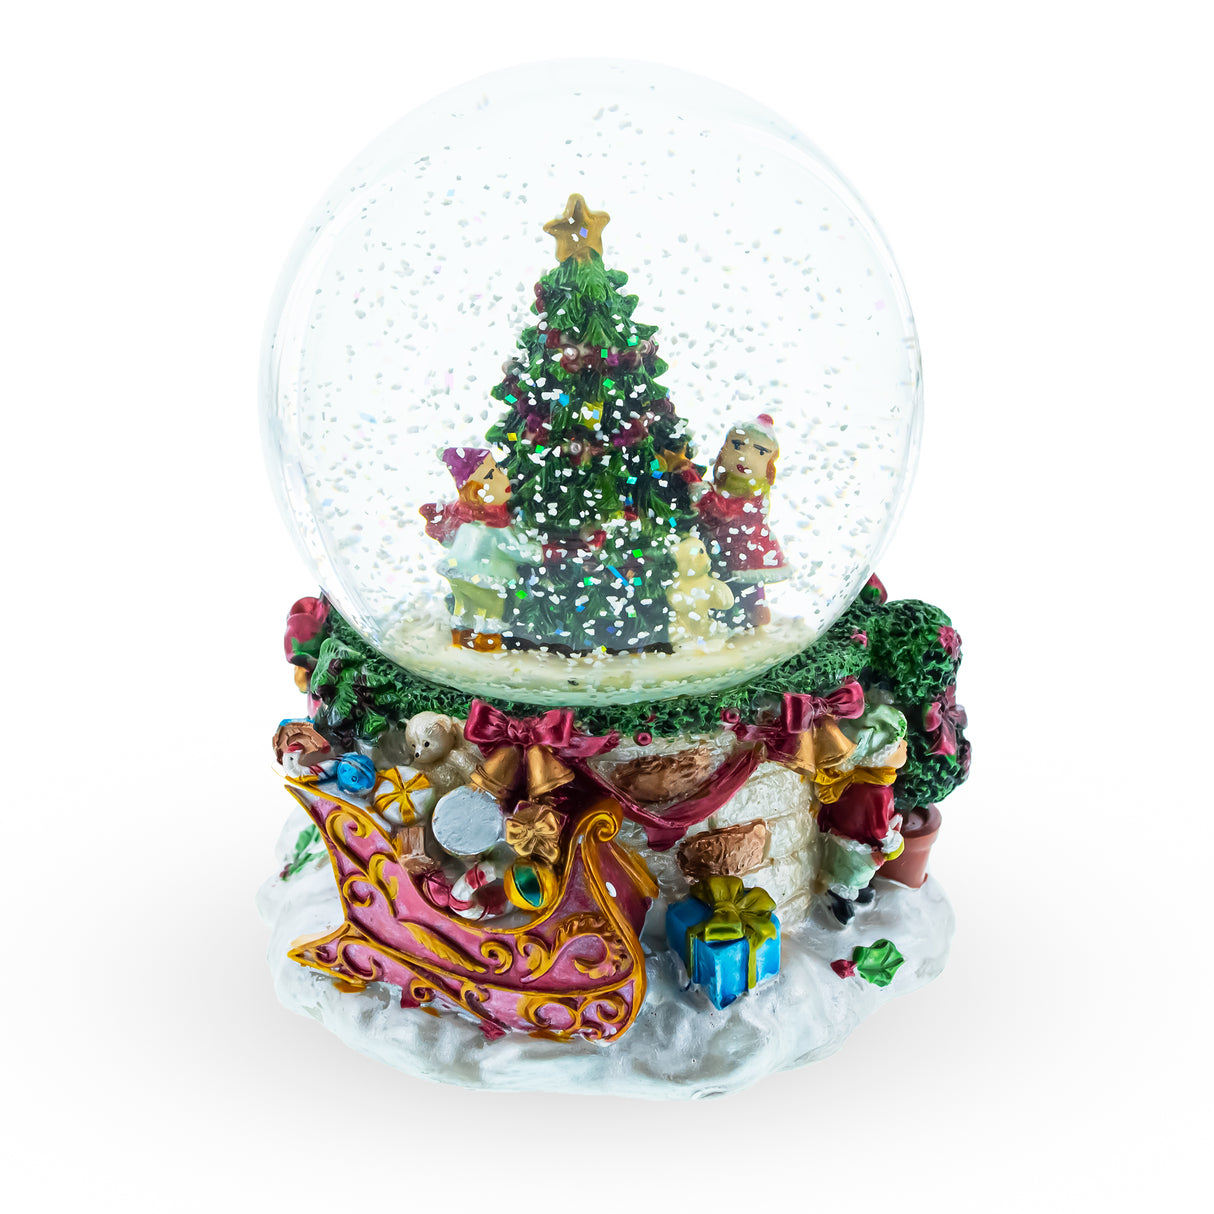 Joyful Children Adorning Christmas Tree: Musical Water Snow Globe in Multi color, Round shape